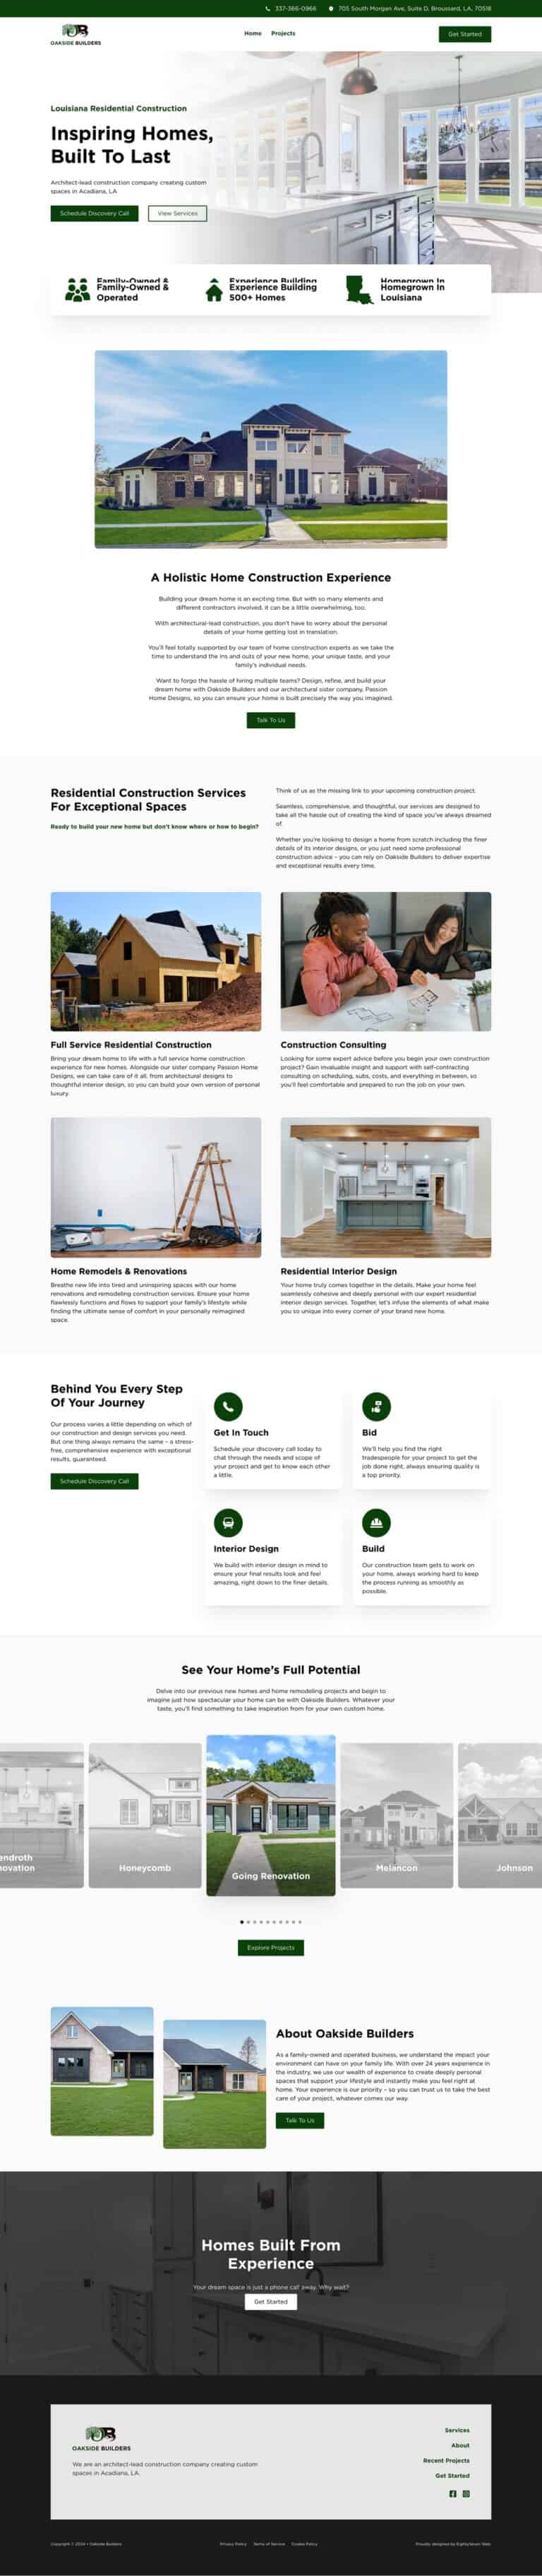 Screenshot of Oakside Builders website.